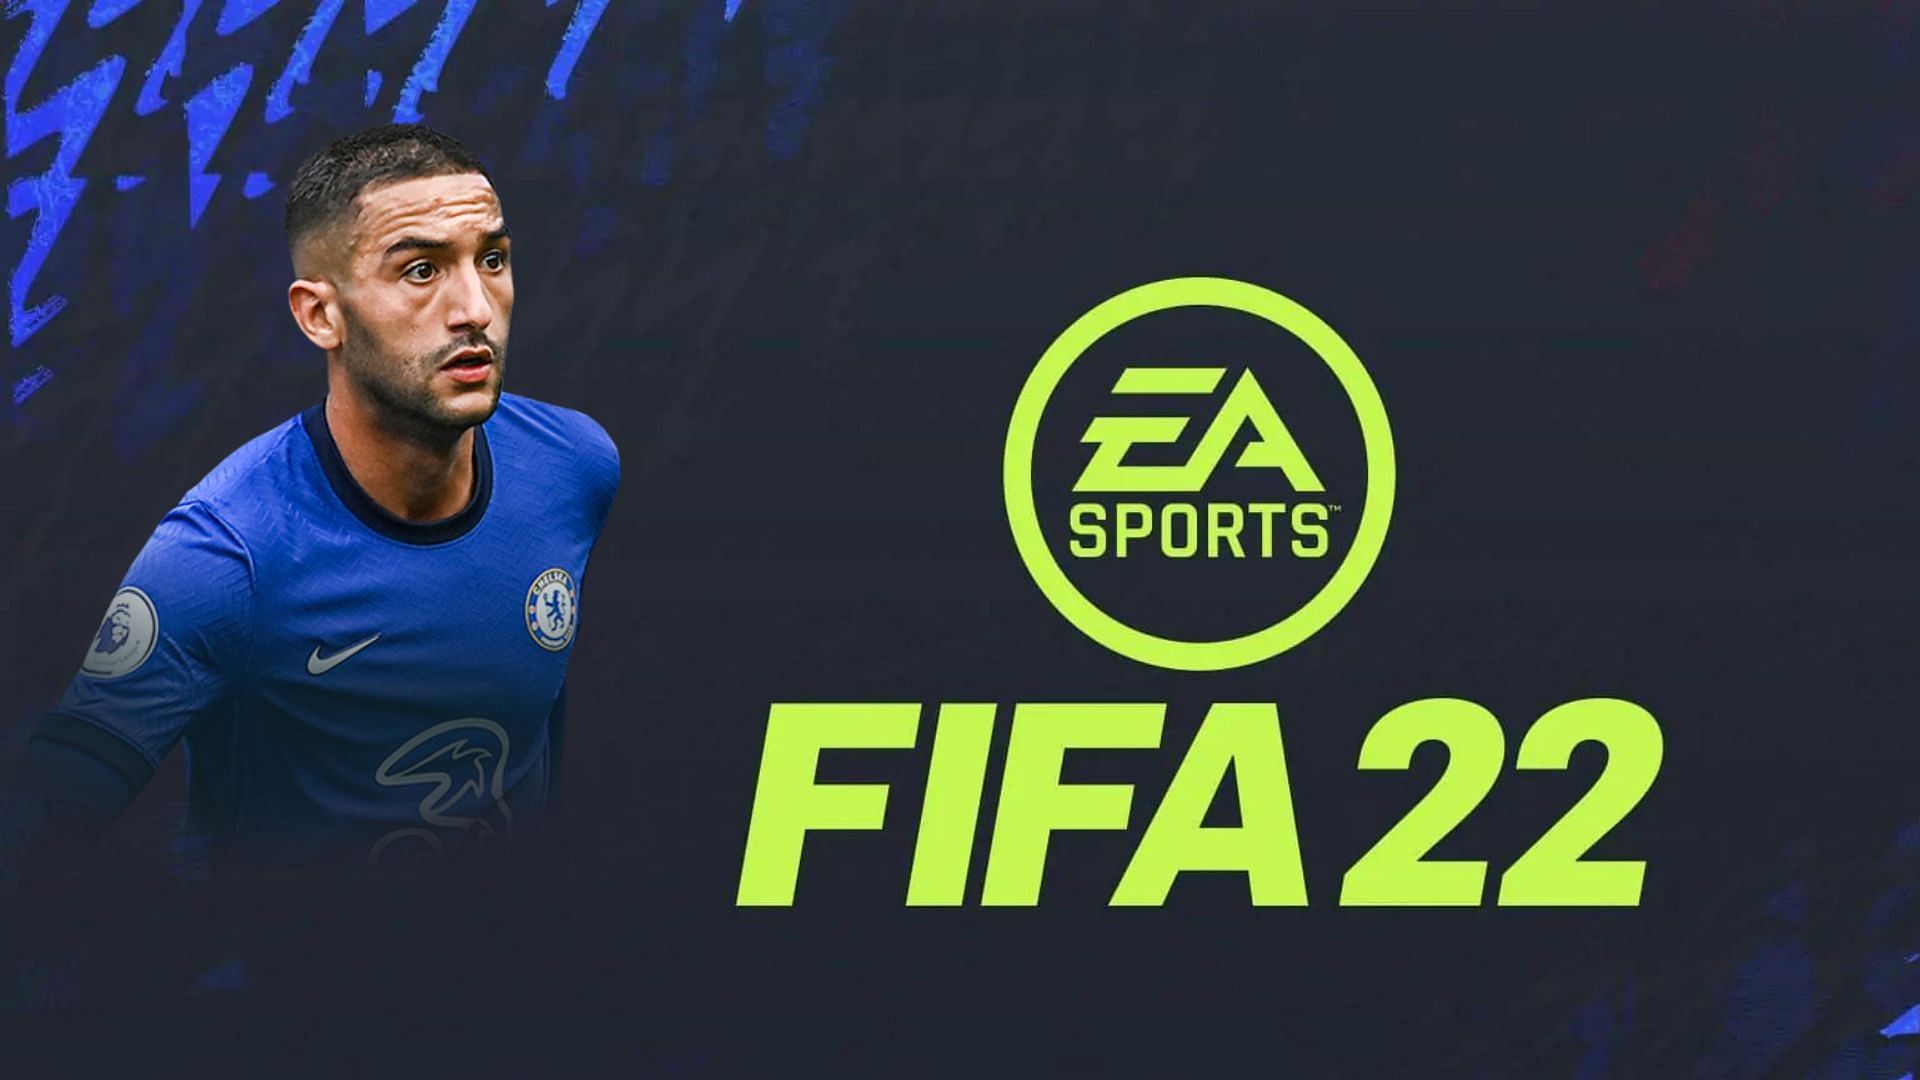 FIFA 22 is live with Hakim Ziyech Players Moments card (Image via Sportskeeda)